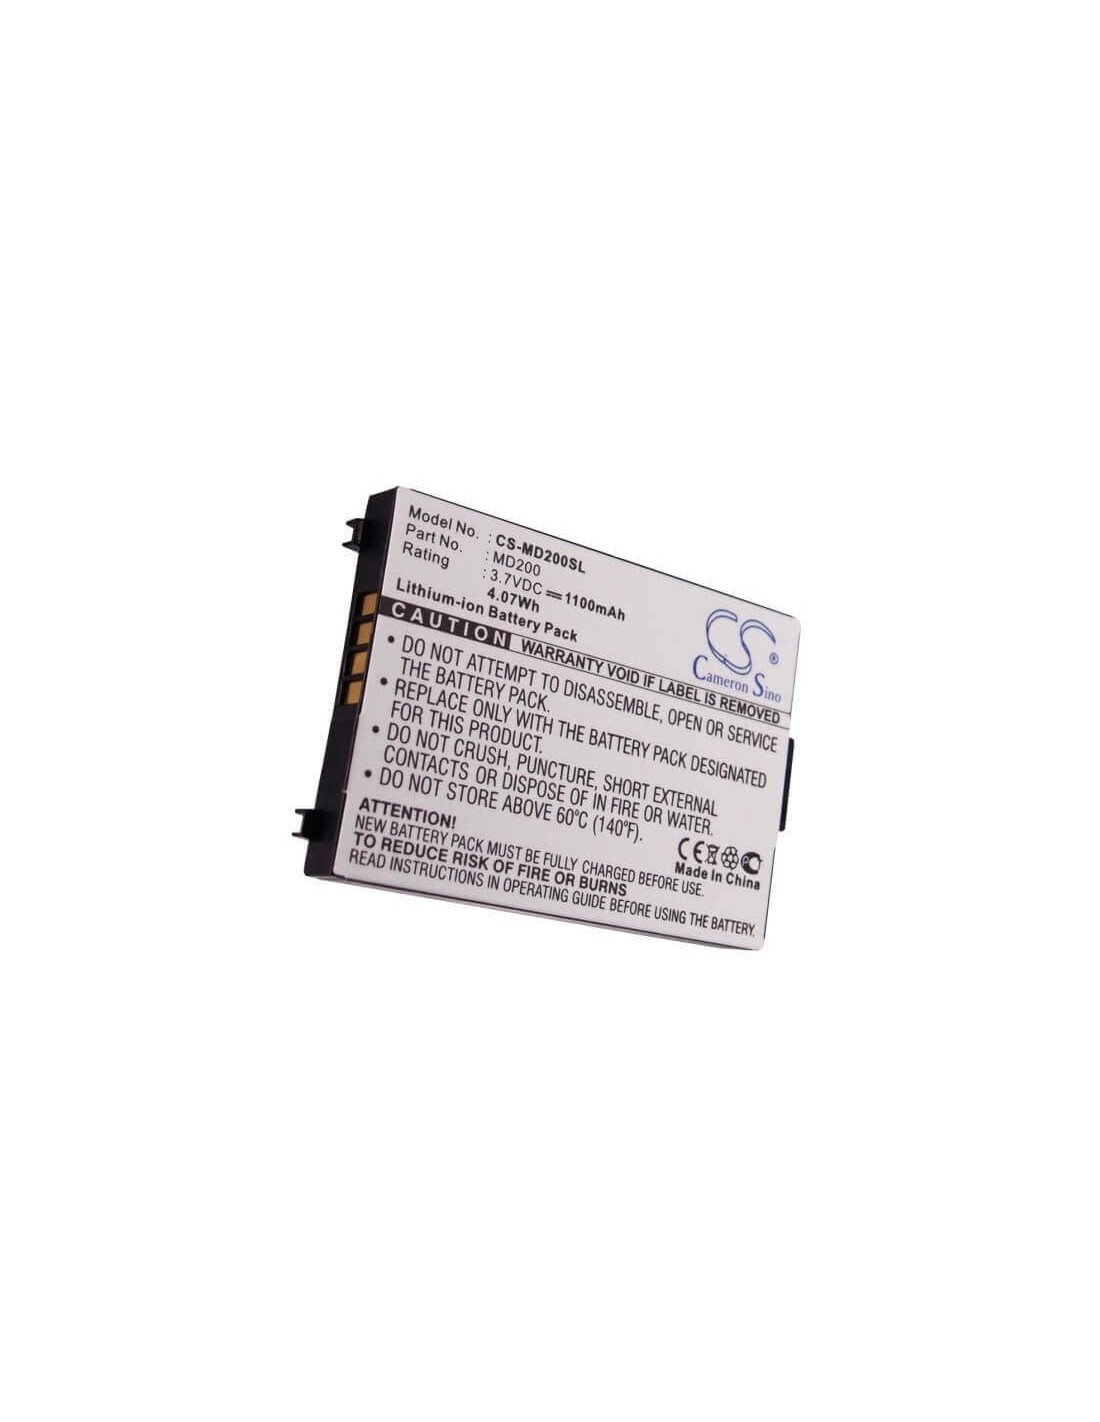 Battery for Medion Md95200, Md95380, Md96300 3.7V, 1100mAh - 4.07Wh